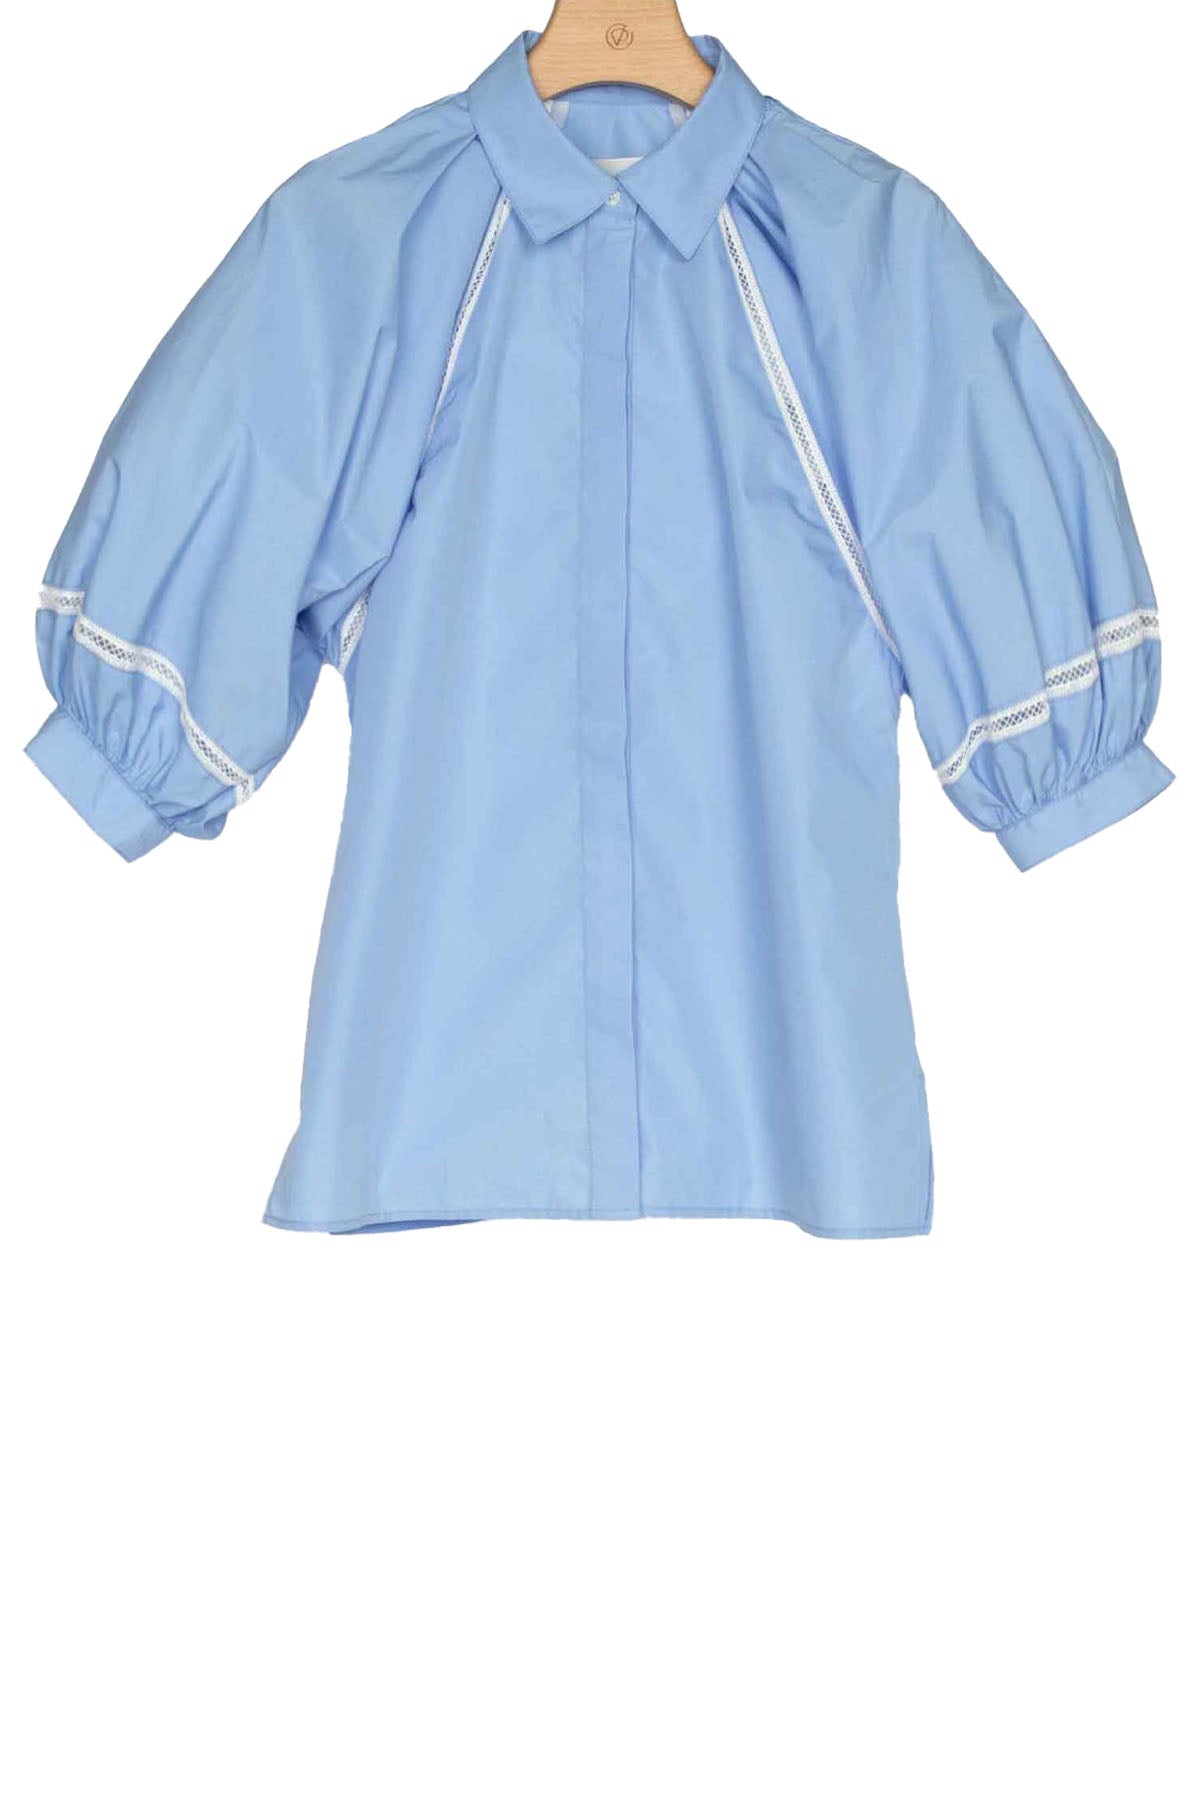 3.1 phillip lim lantern sleeve shirt with lattice trim - white – Eloise